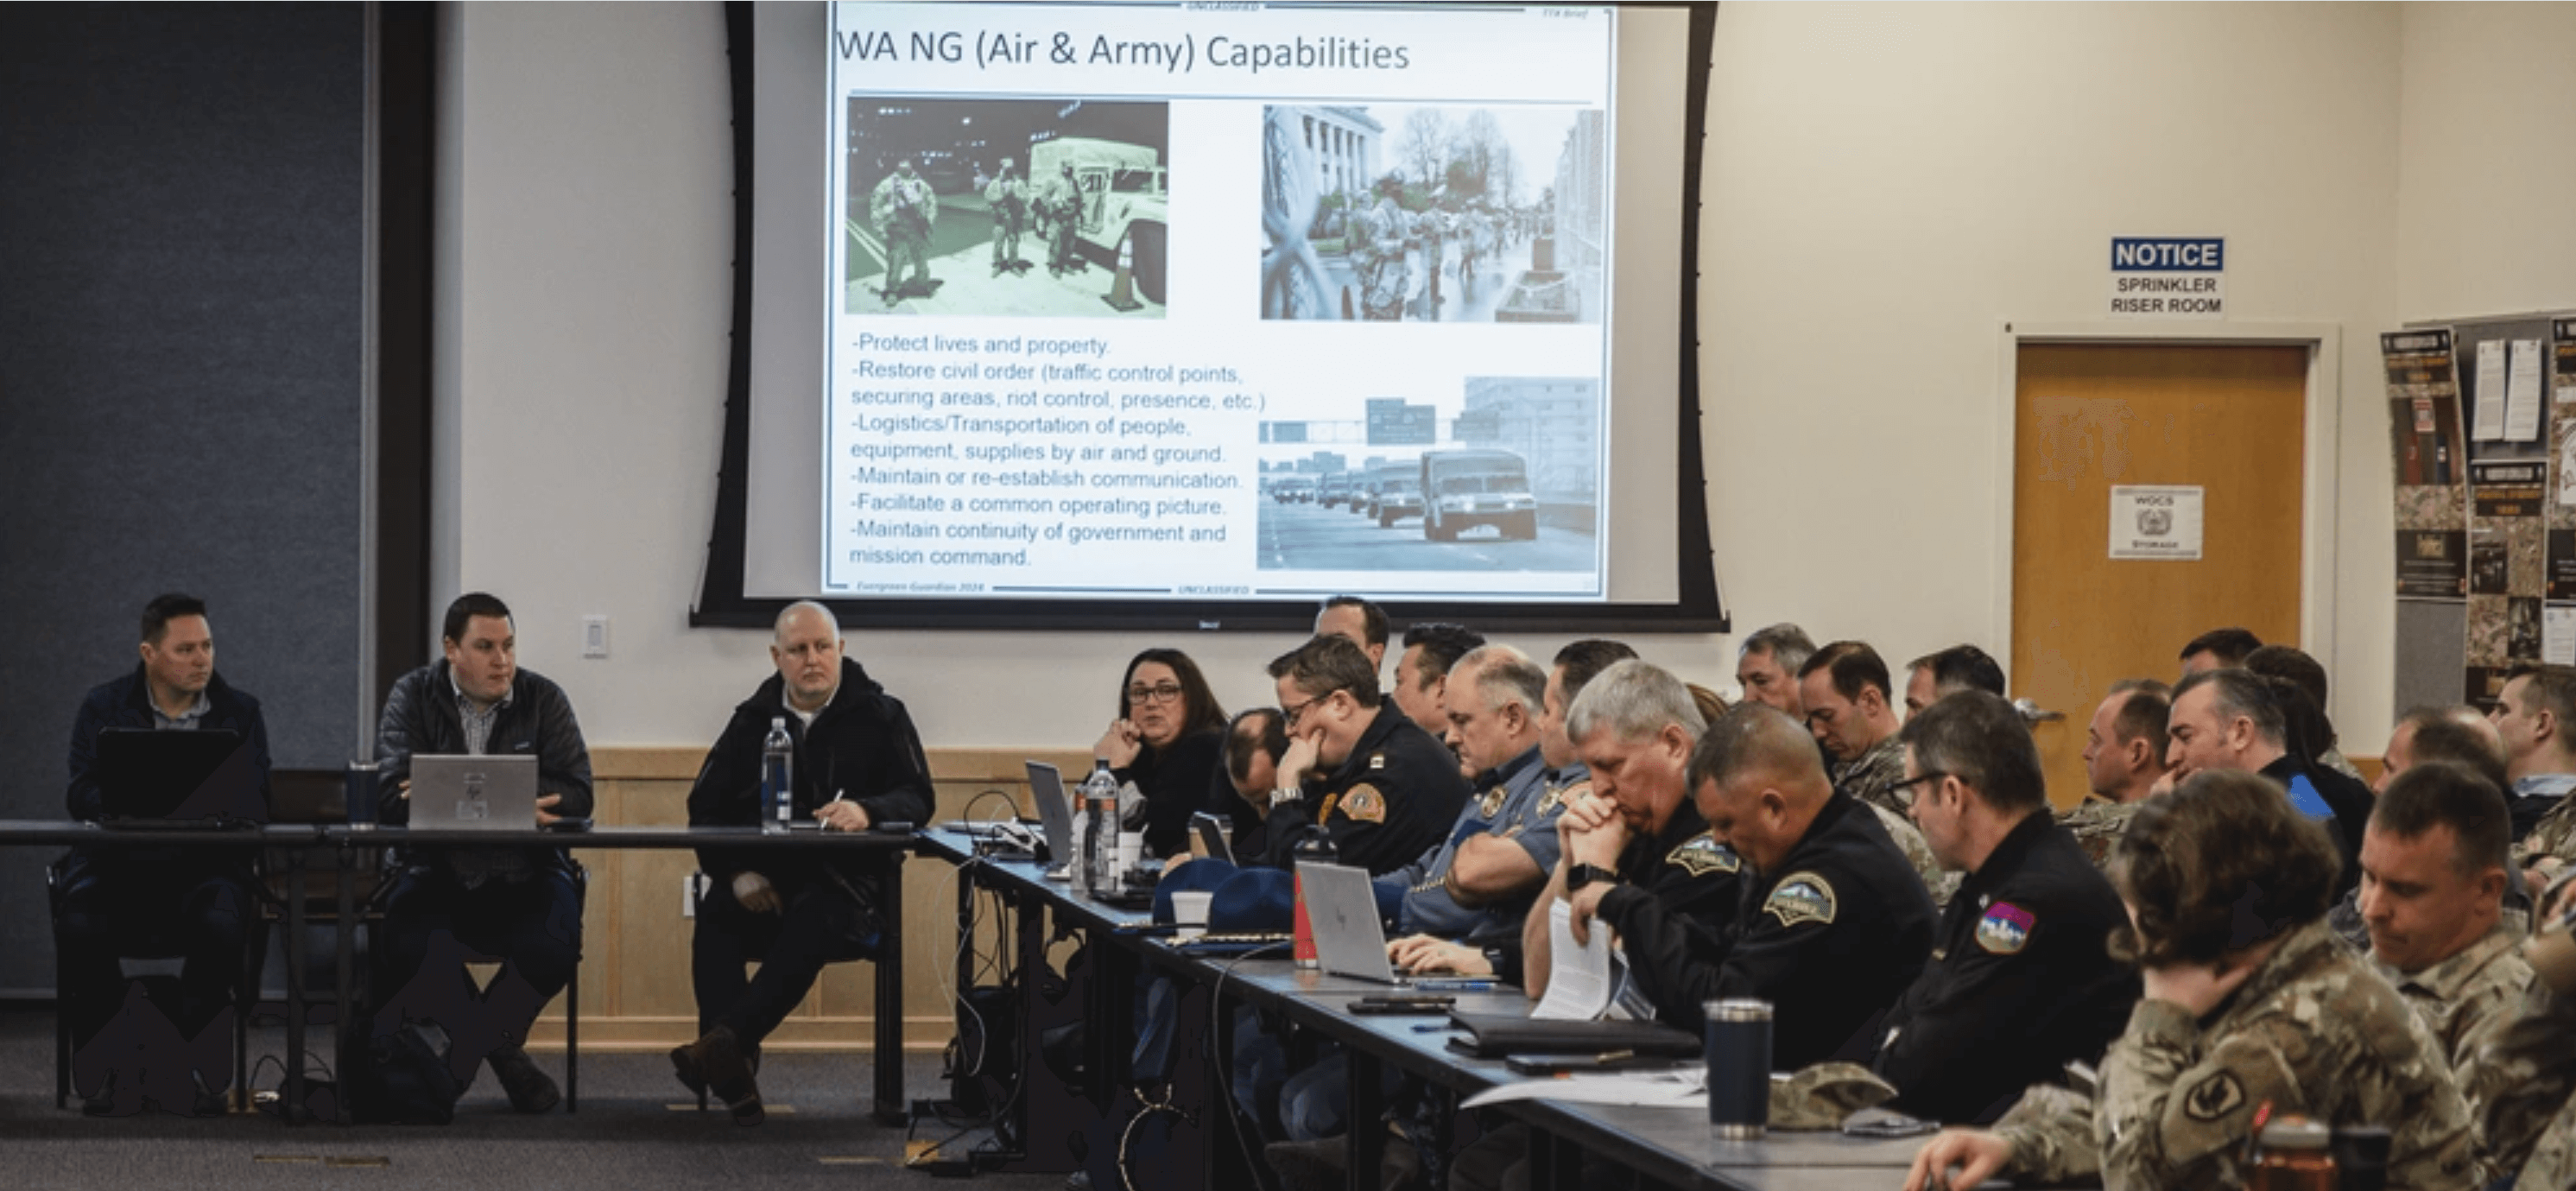 Civil unrest discussion brings agency, law enforcement together